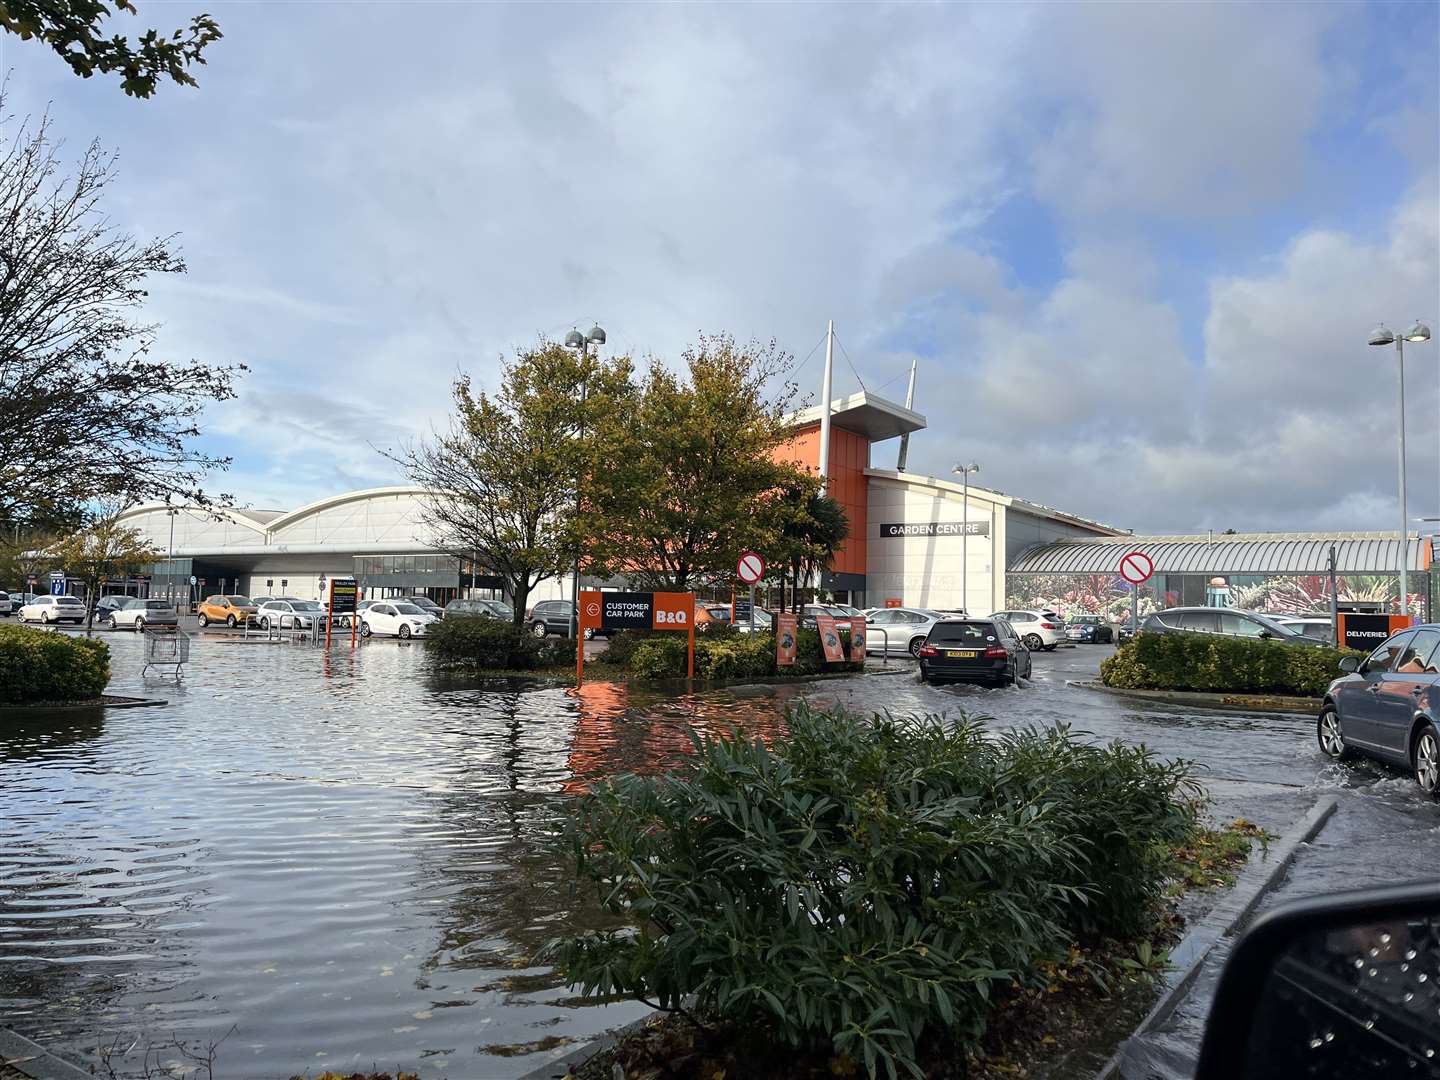 The B&Q car park in Ashford flooded last week amid the heavy rain (60860802)